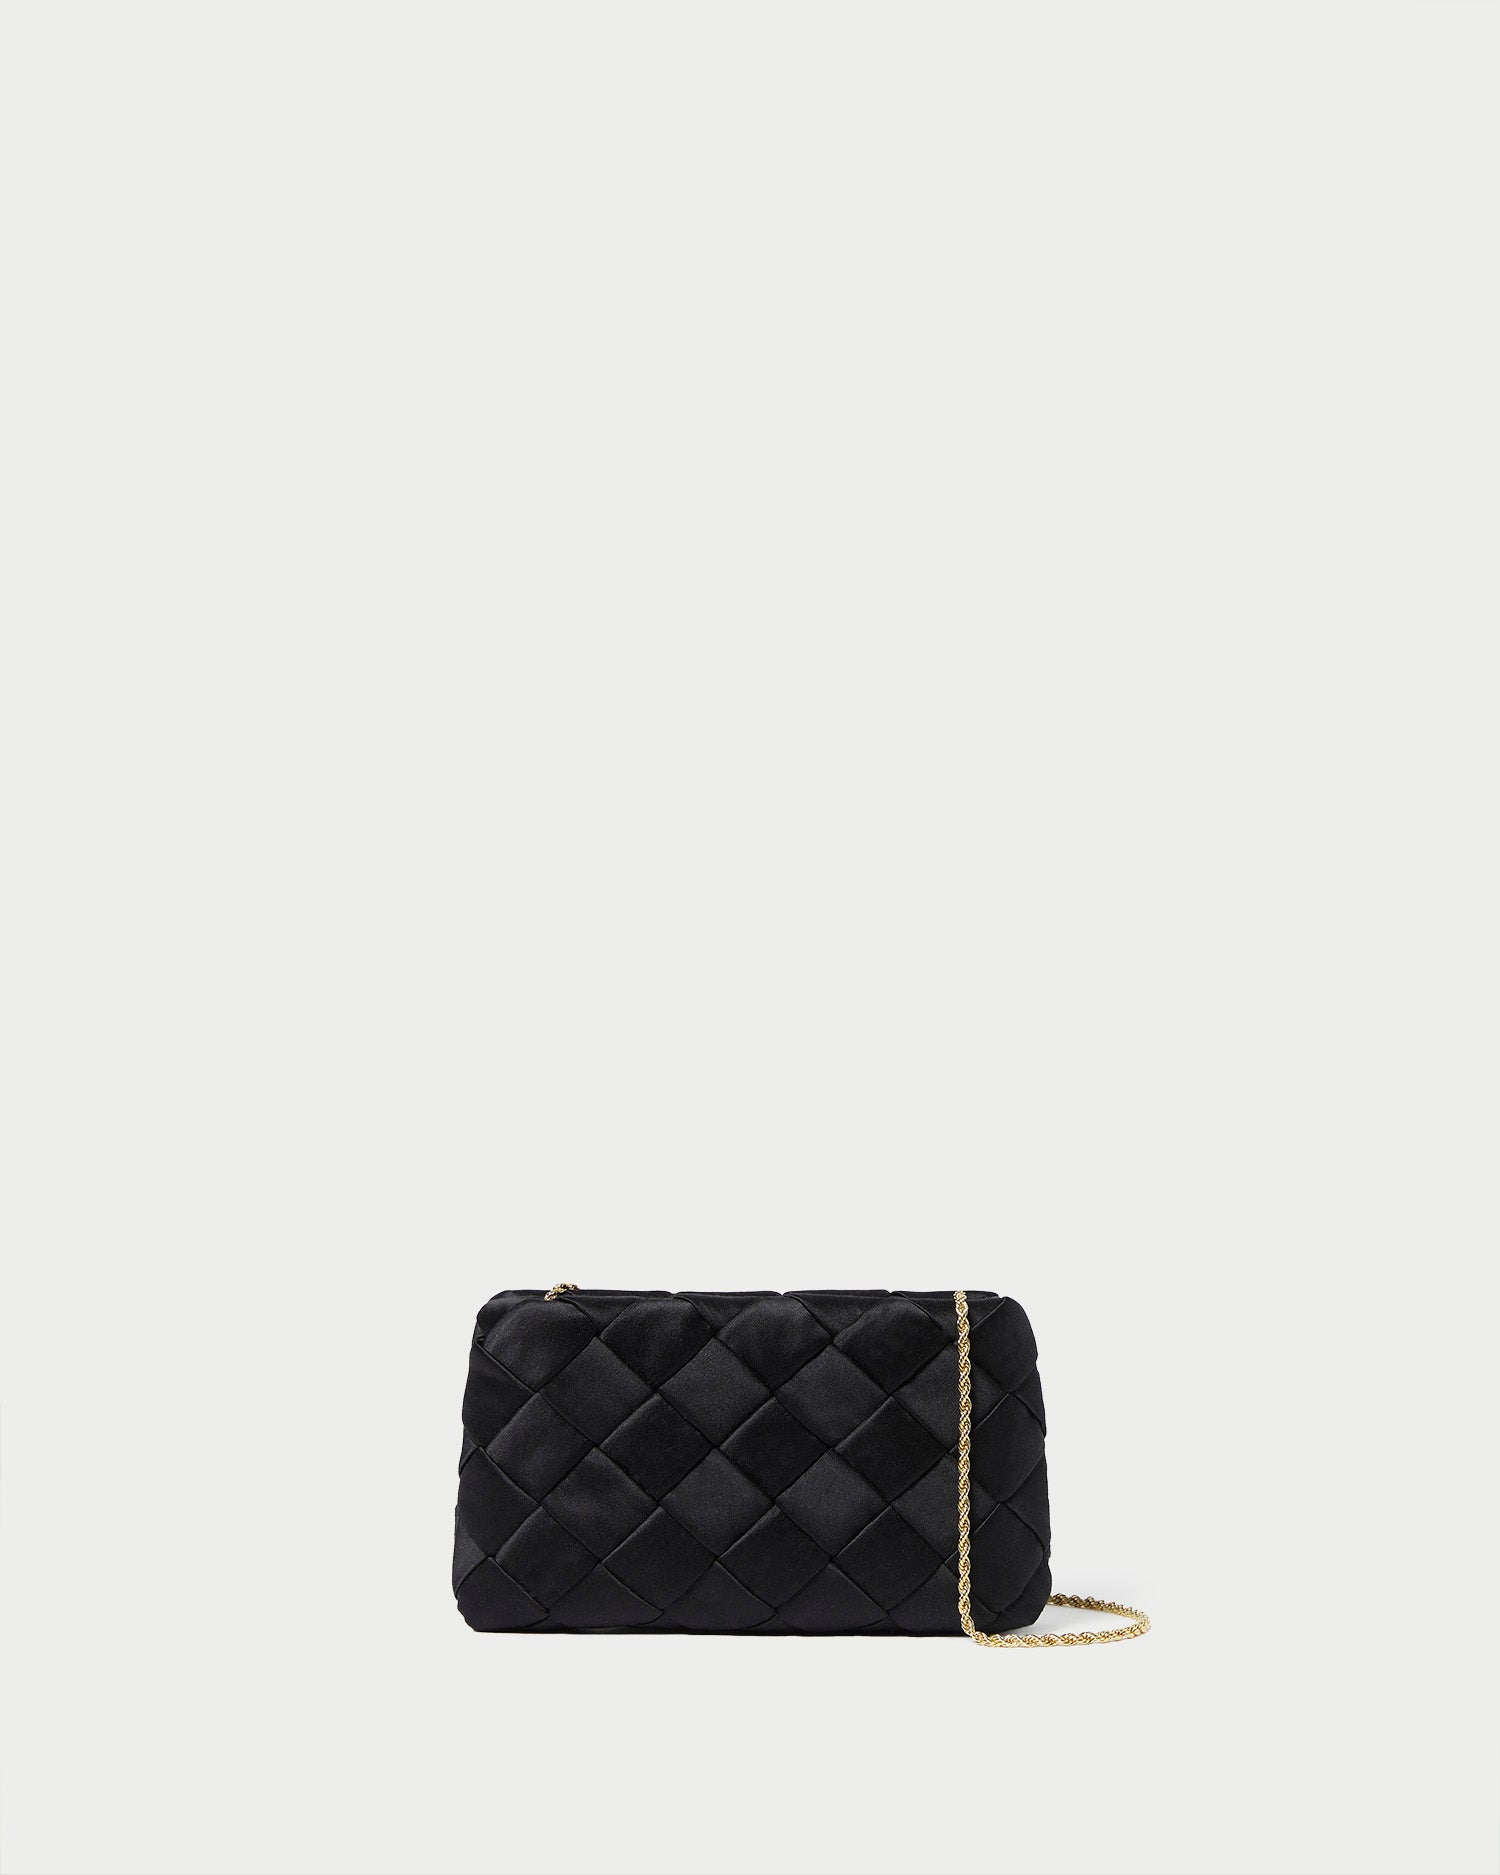 Louis Vuitton Leather Love Note Clutch W/ Strap - Black Clutches